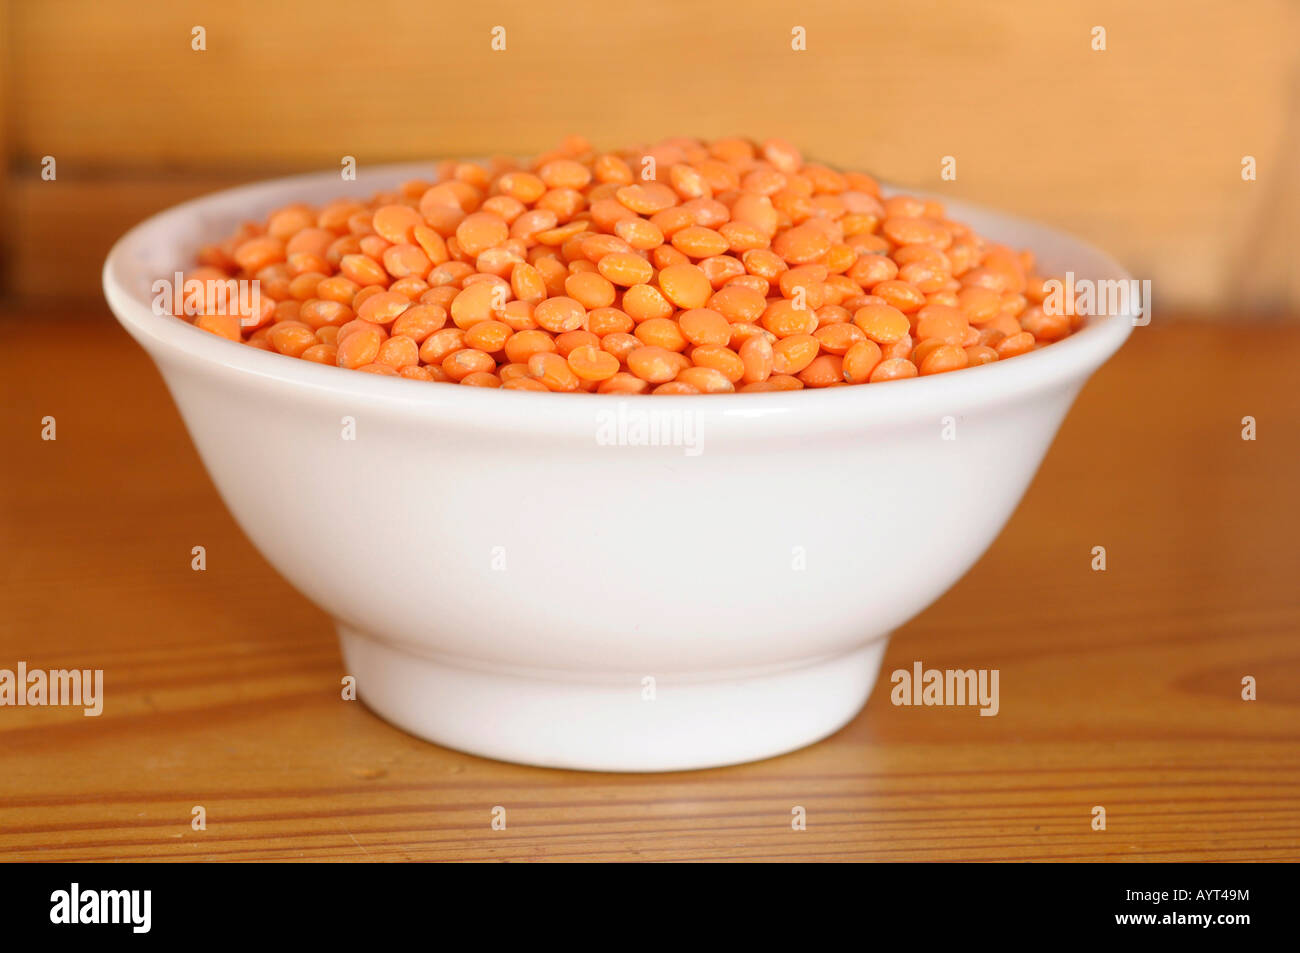 Red lentils (Lens esculenta) in a bowl Stock Photo